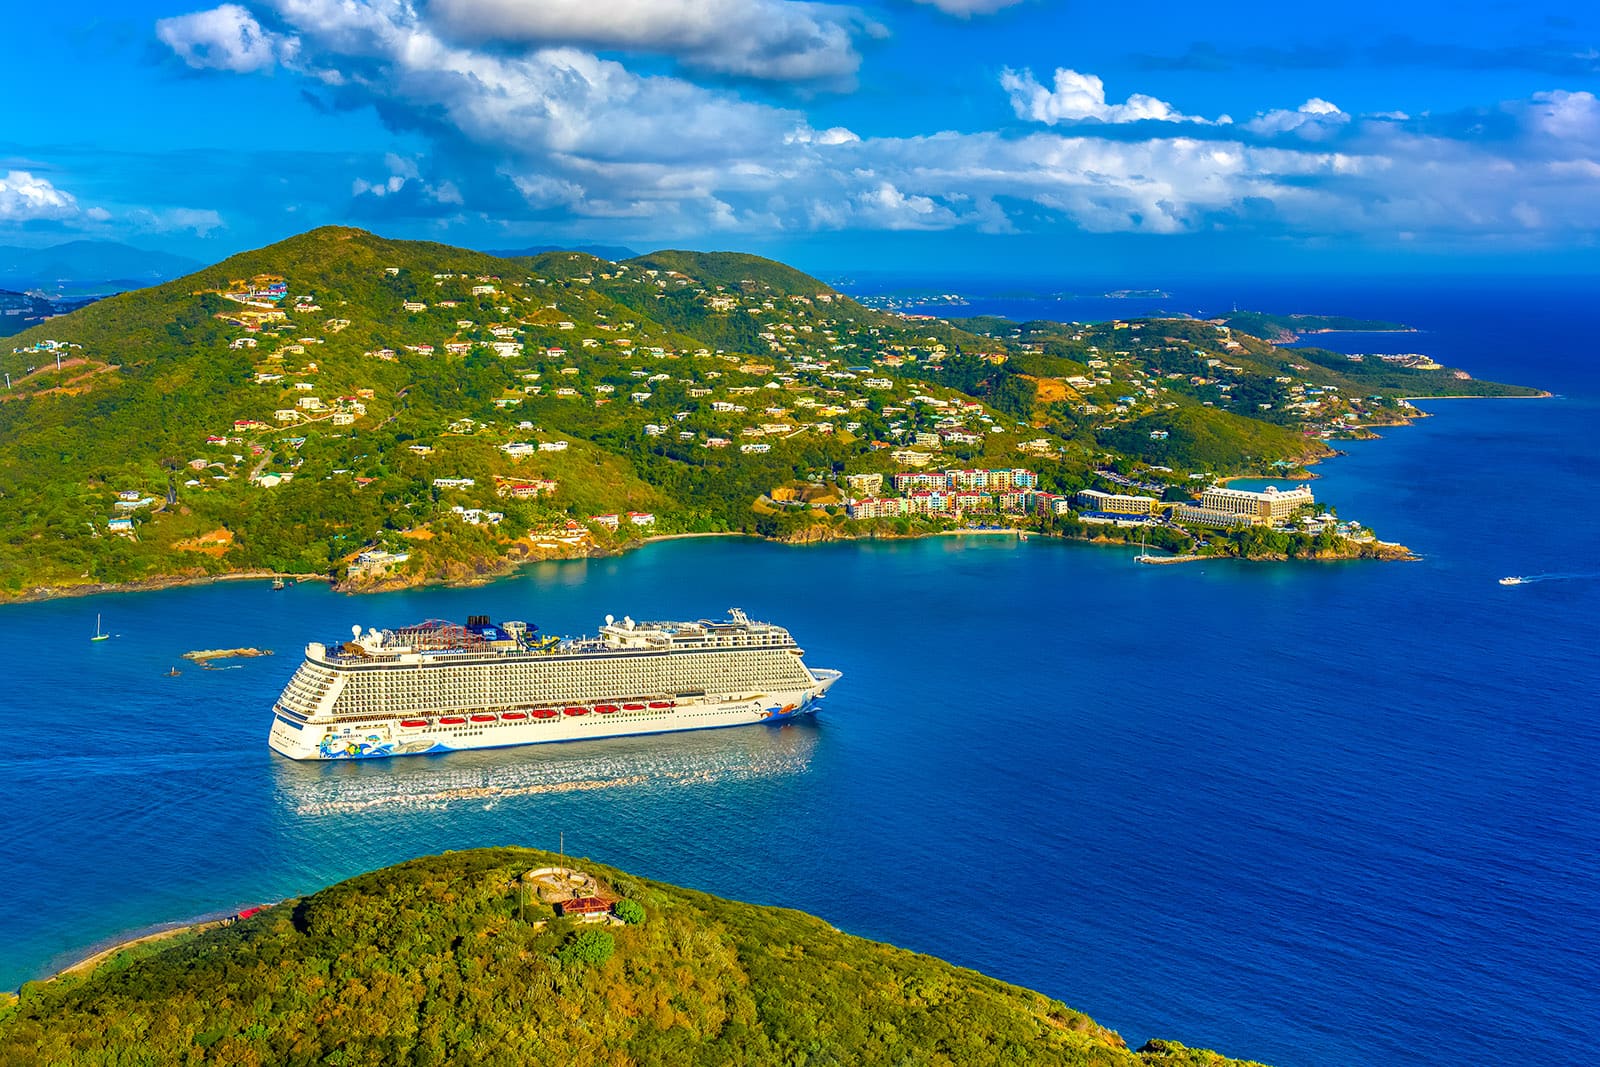 Explore Caribbean Cruises from New York with Norwegian